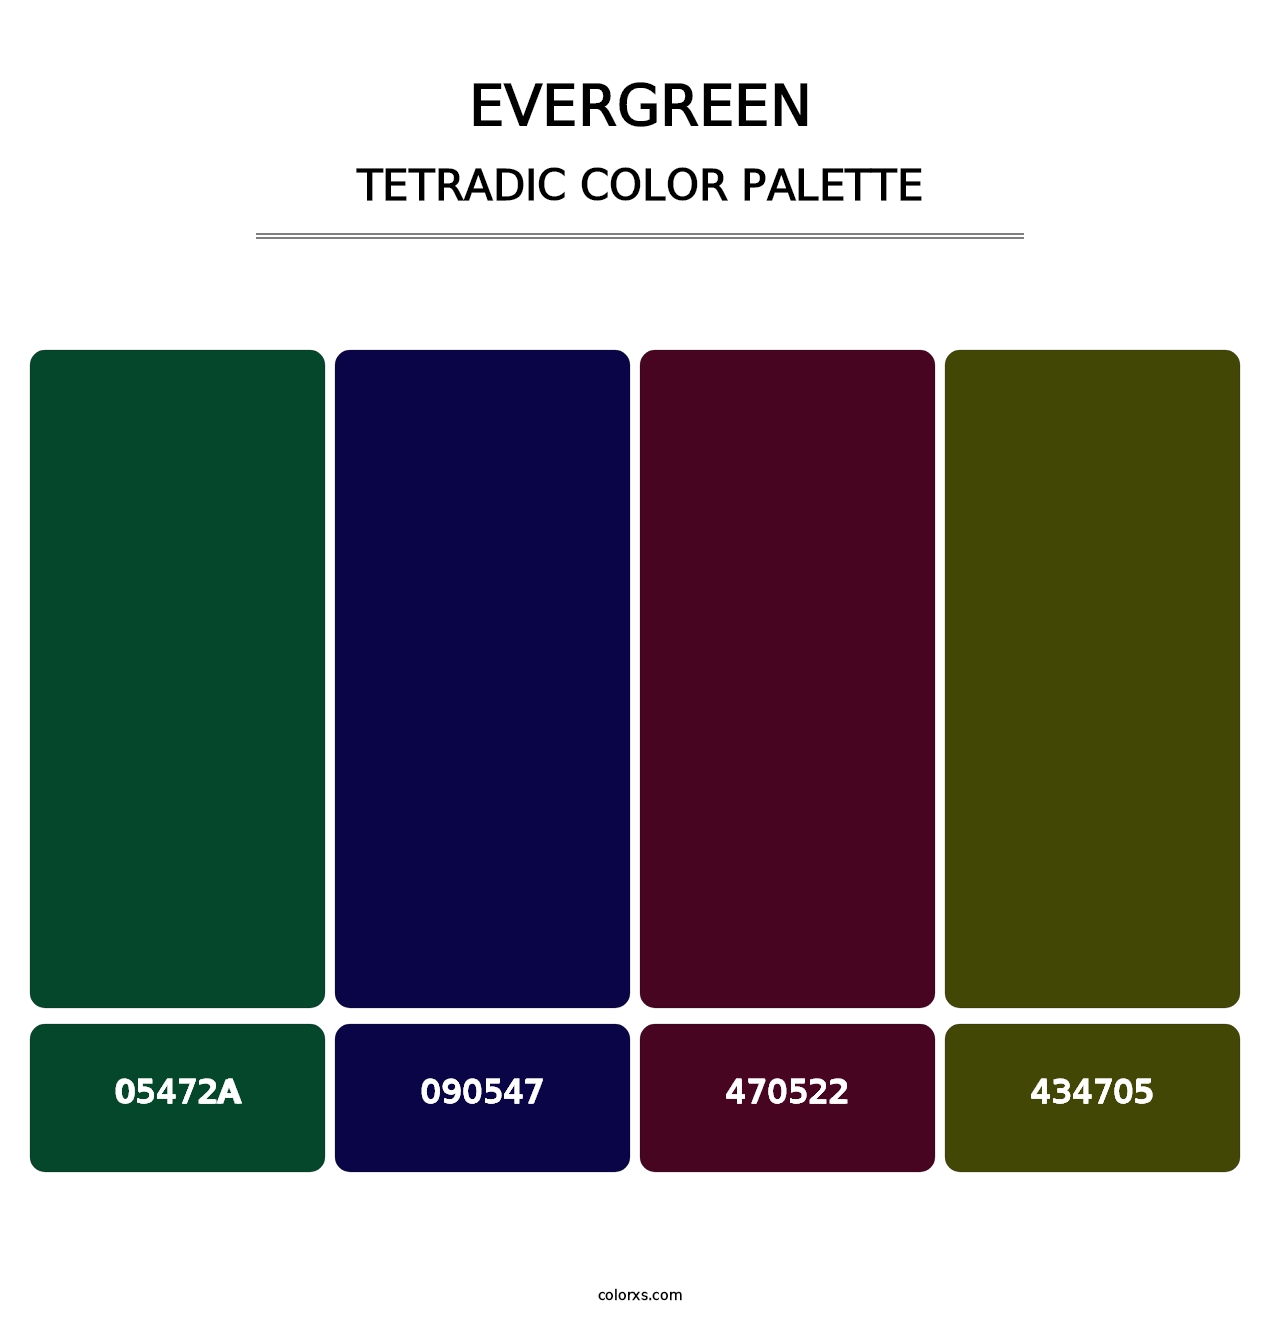 Evergreen - Tetradic Color Palette